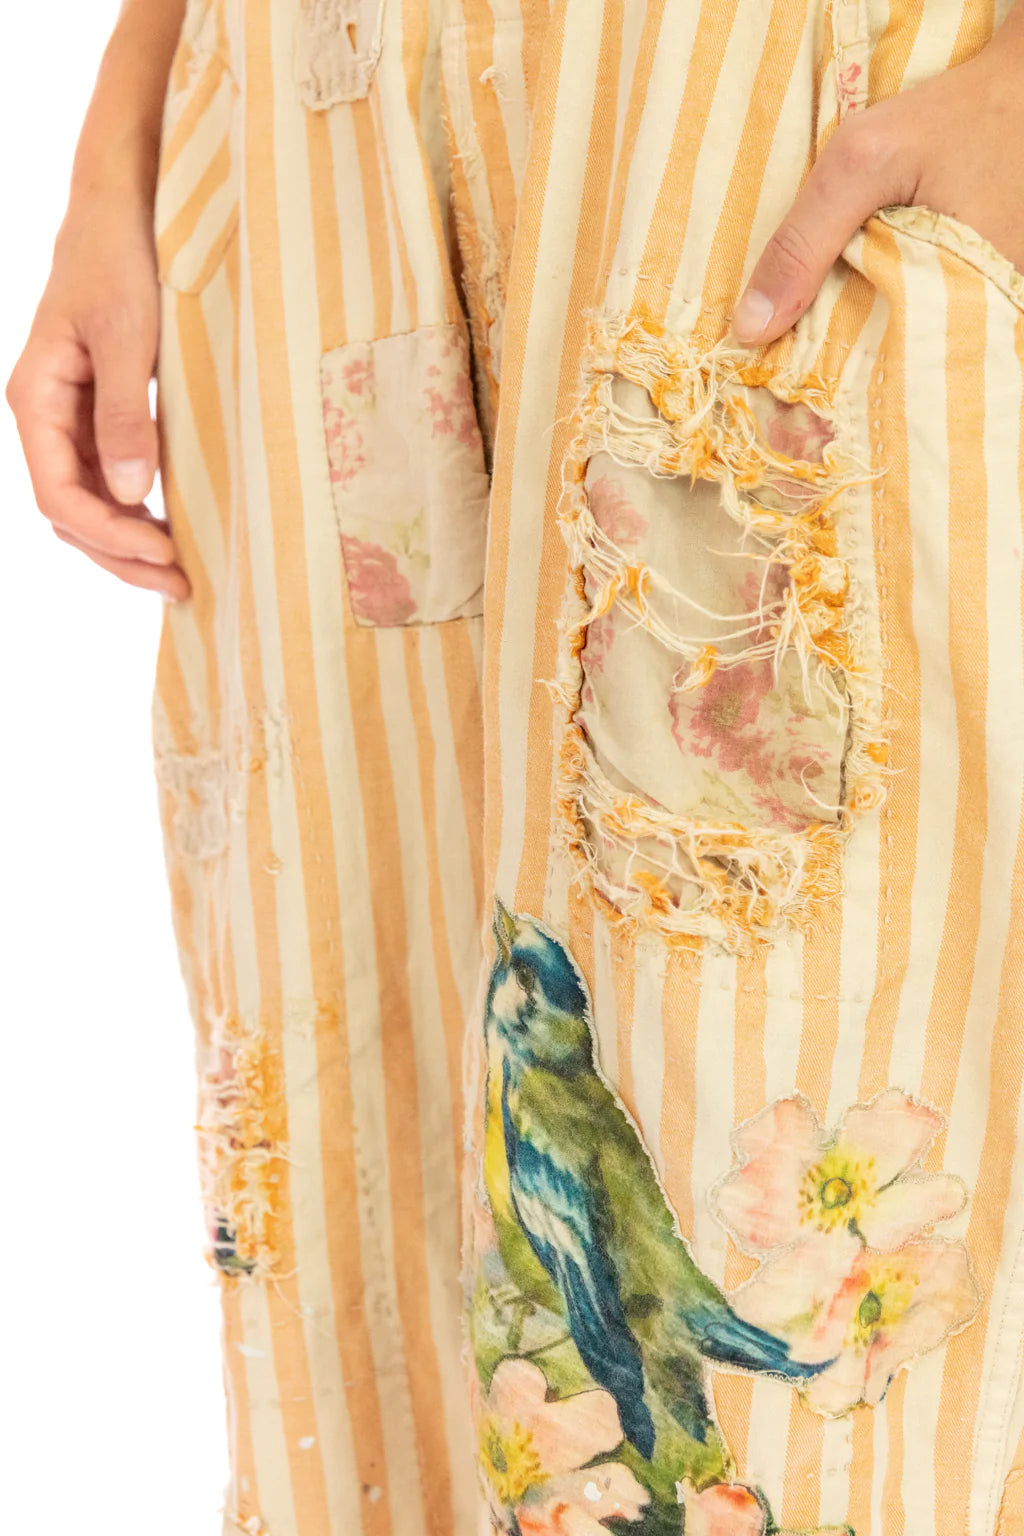 Magnolia Pearl | Hose / Trousers Appliqué Stripe Overalls | OVERALLS 045-DRMSC-OS - Feenreich